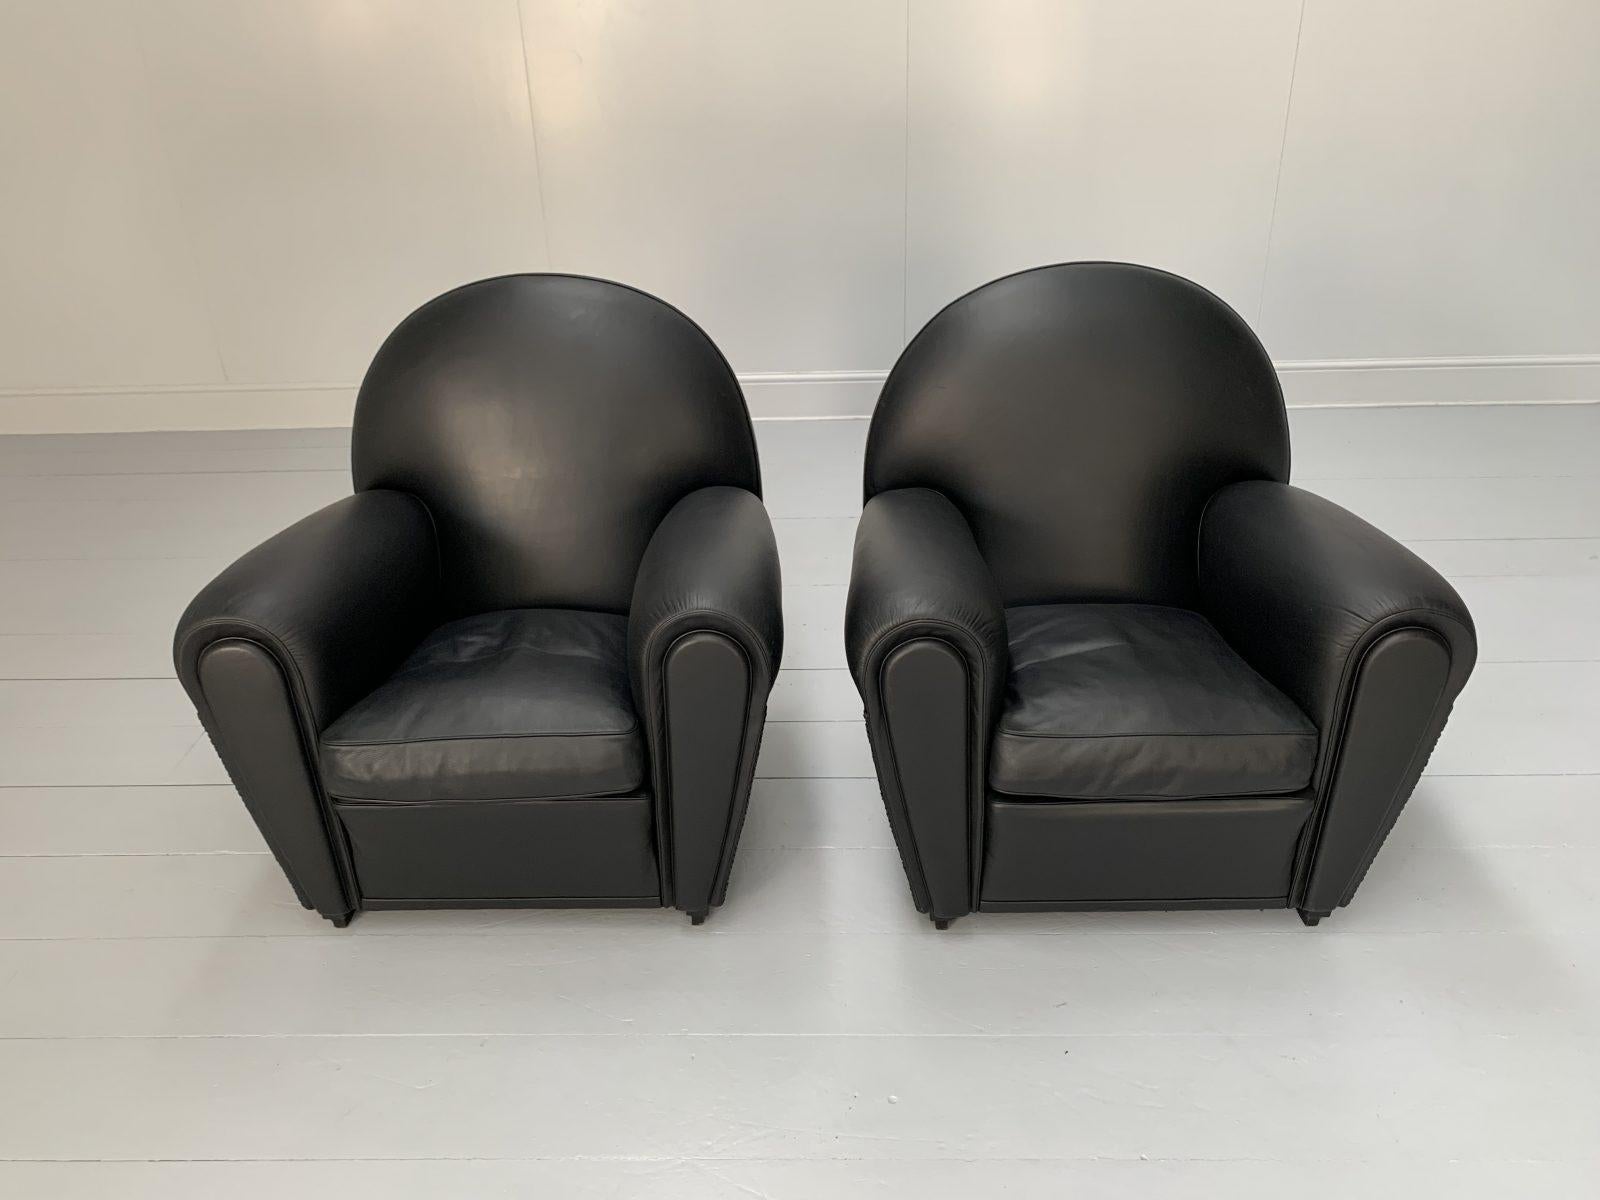 Pair of Poltrona Frau “Vanity Fair” Armchairs – In “Pelle Frau” Black Leather In Good Condition For Sale In Barrowford, GB